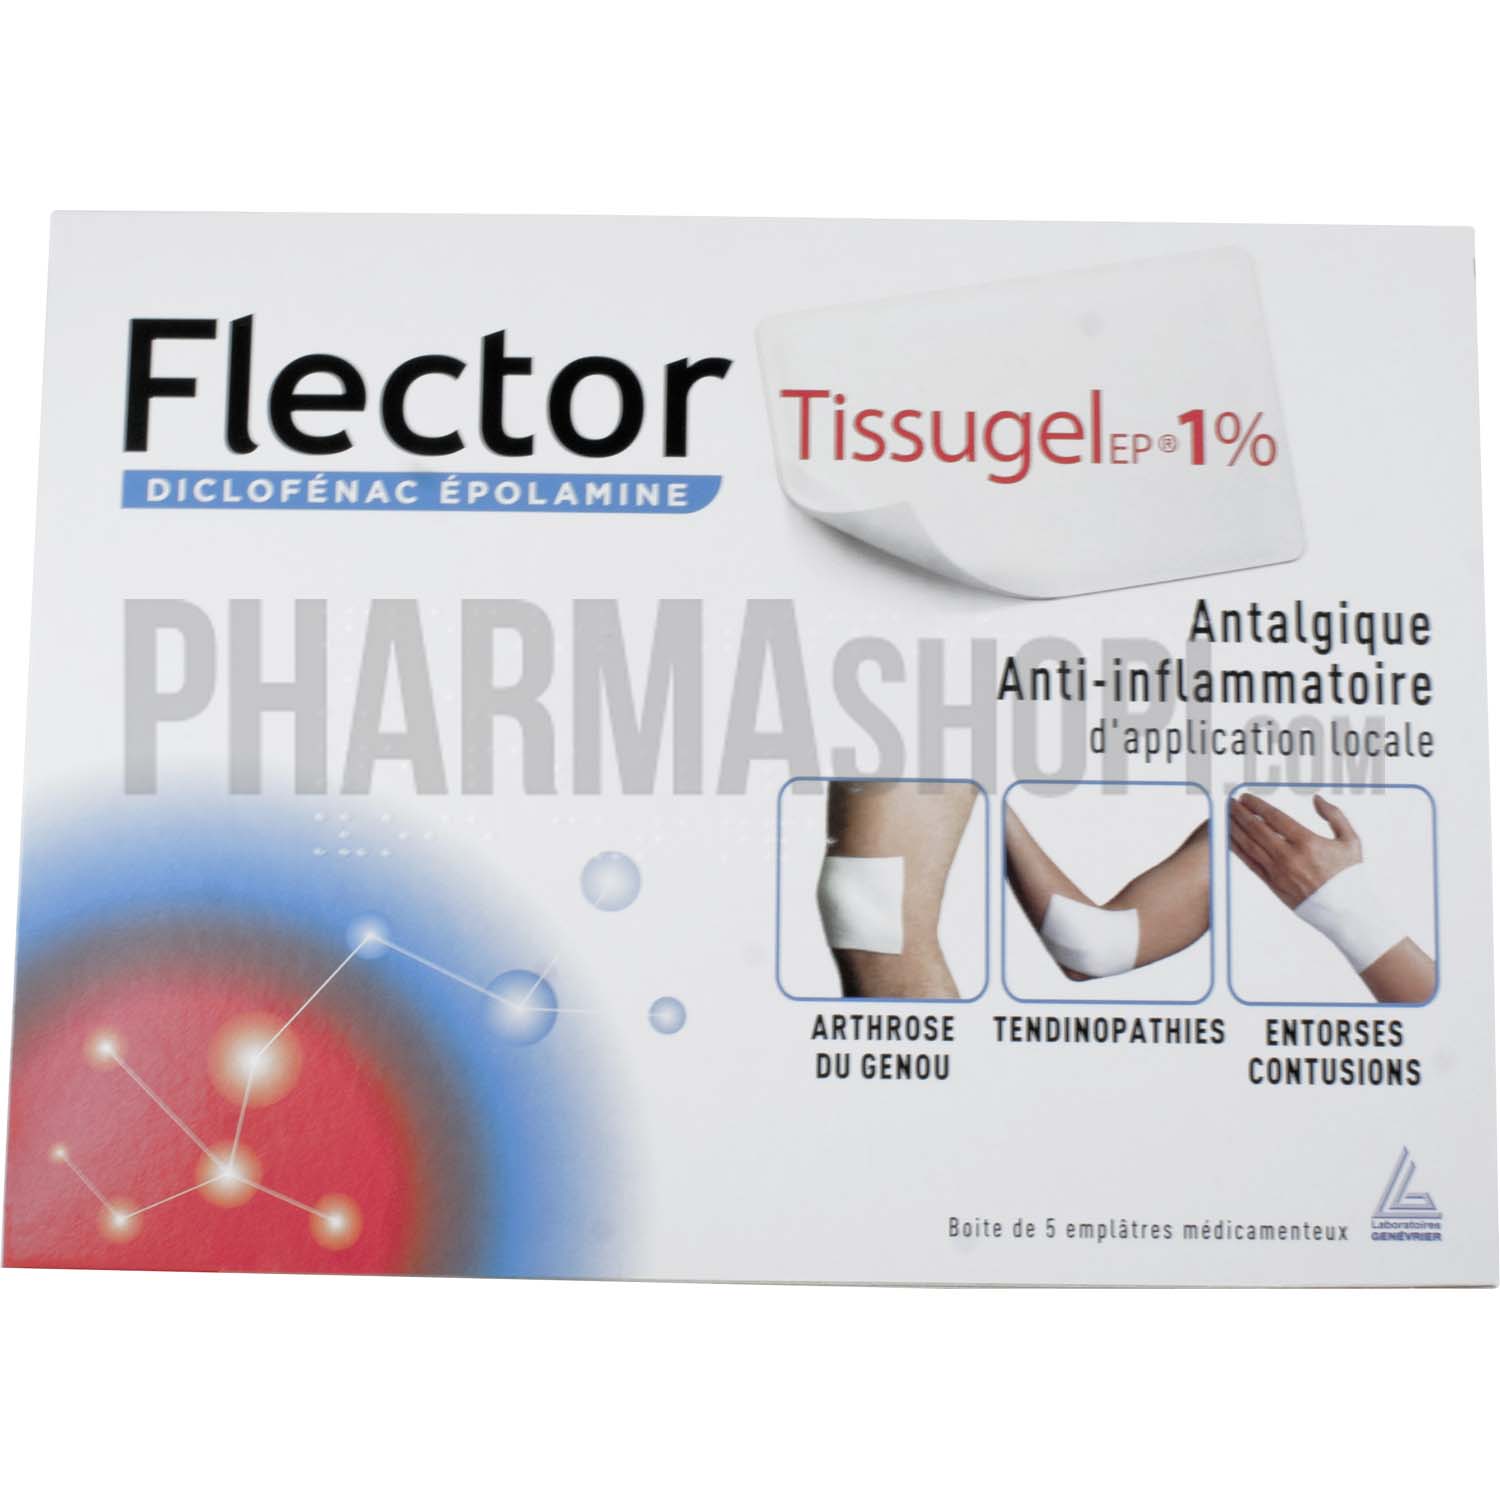 Flector Tissugel 1% EP - 5 emplâtres médicamenteux